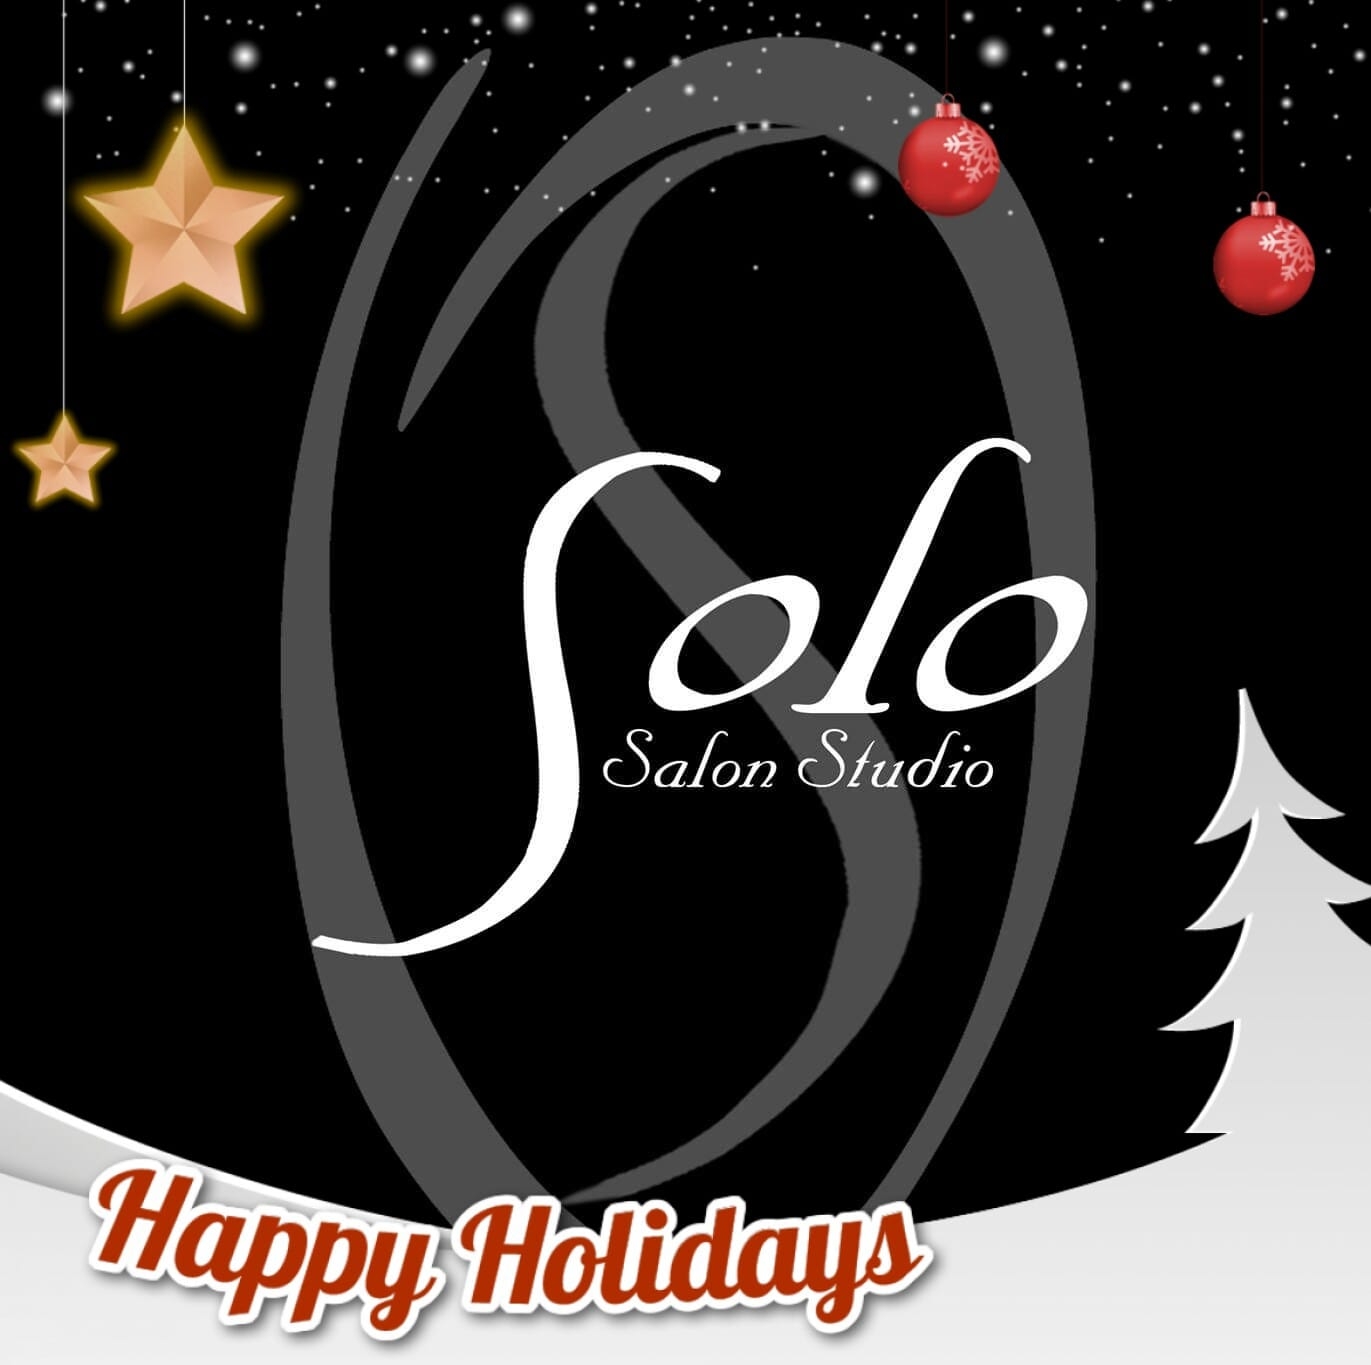 The Solo Salon Logo